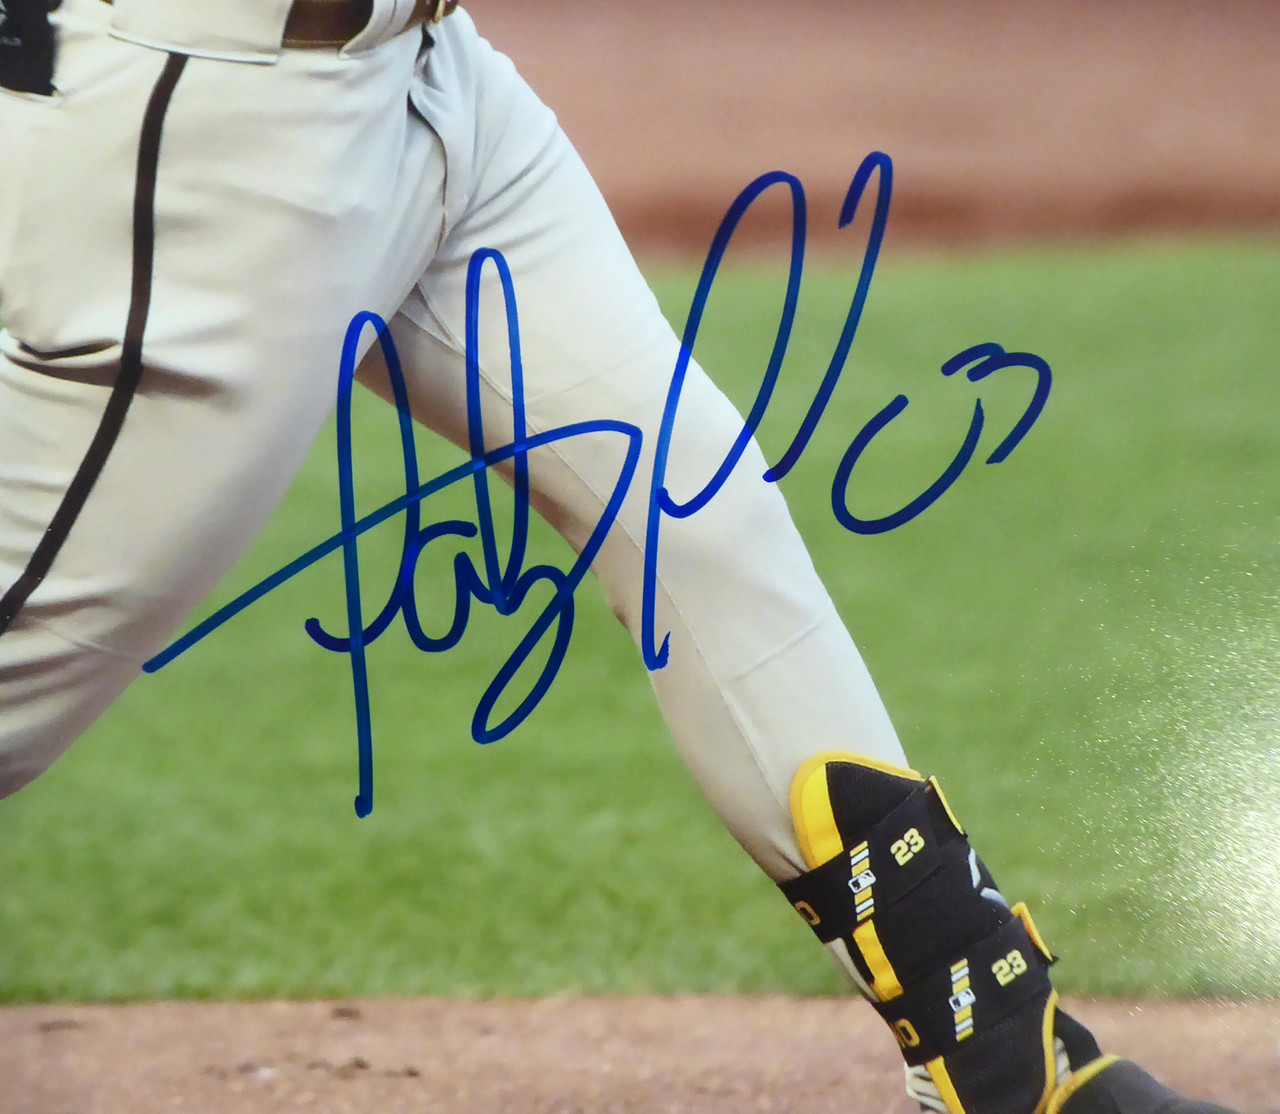  Fernando Tatis Jr San Diego Padres Signed Autograph Custom Jersey  White JSA Certified : Sports & Outdoors